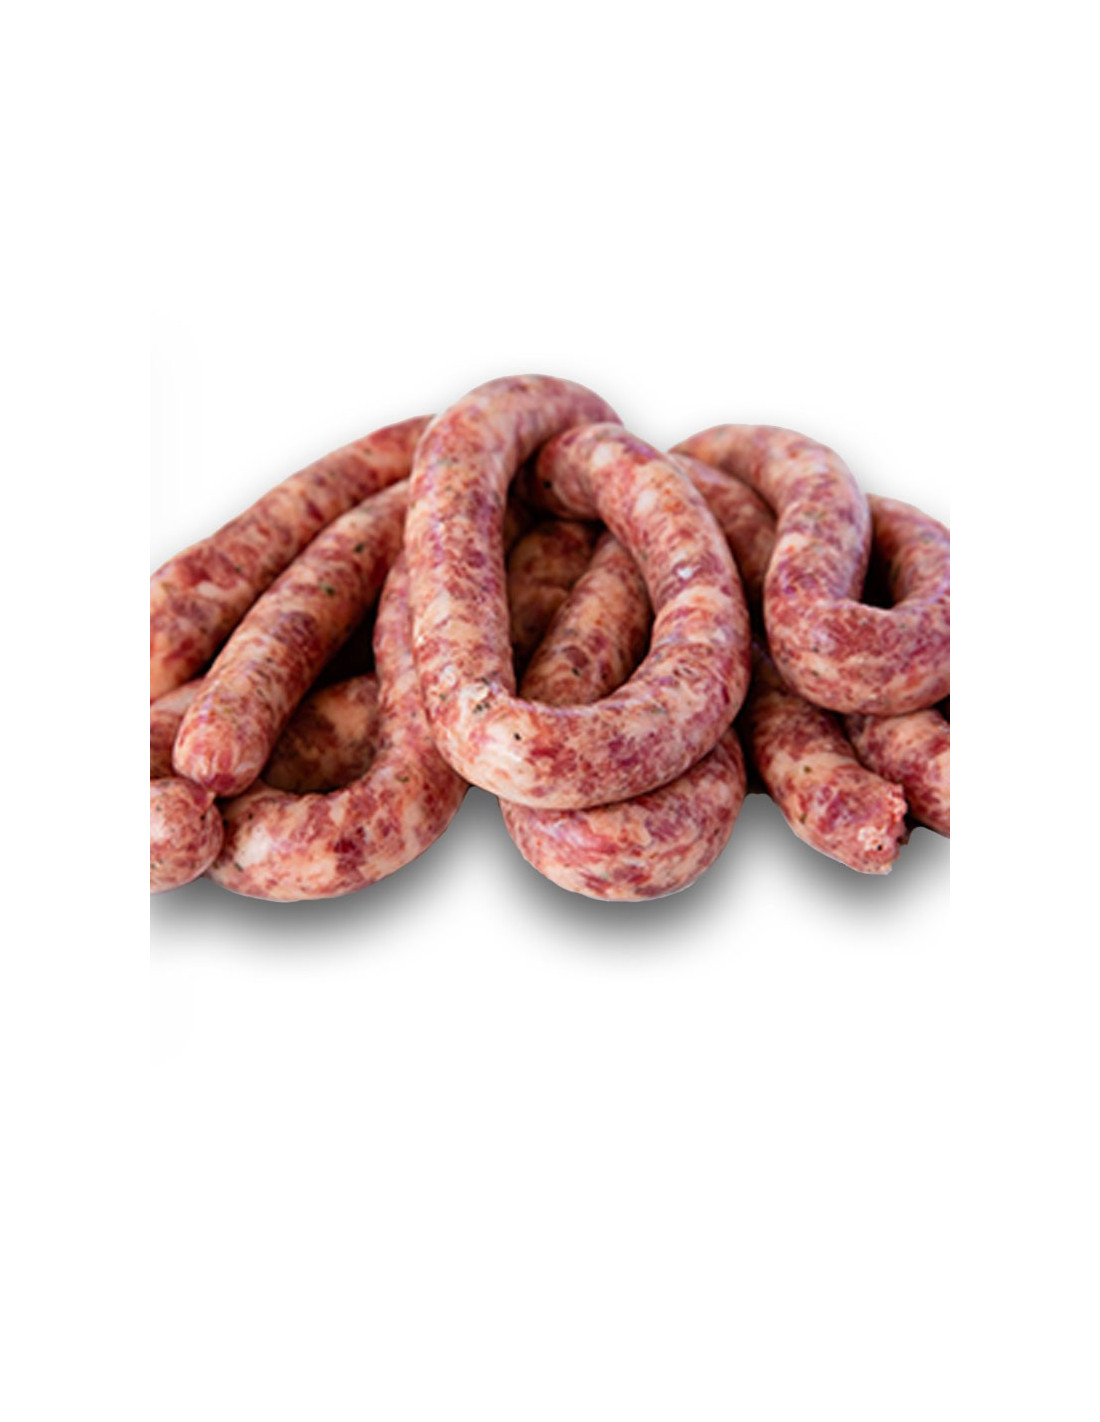 Buy Salchicha - Parrillera Sausage, 1.5kg from